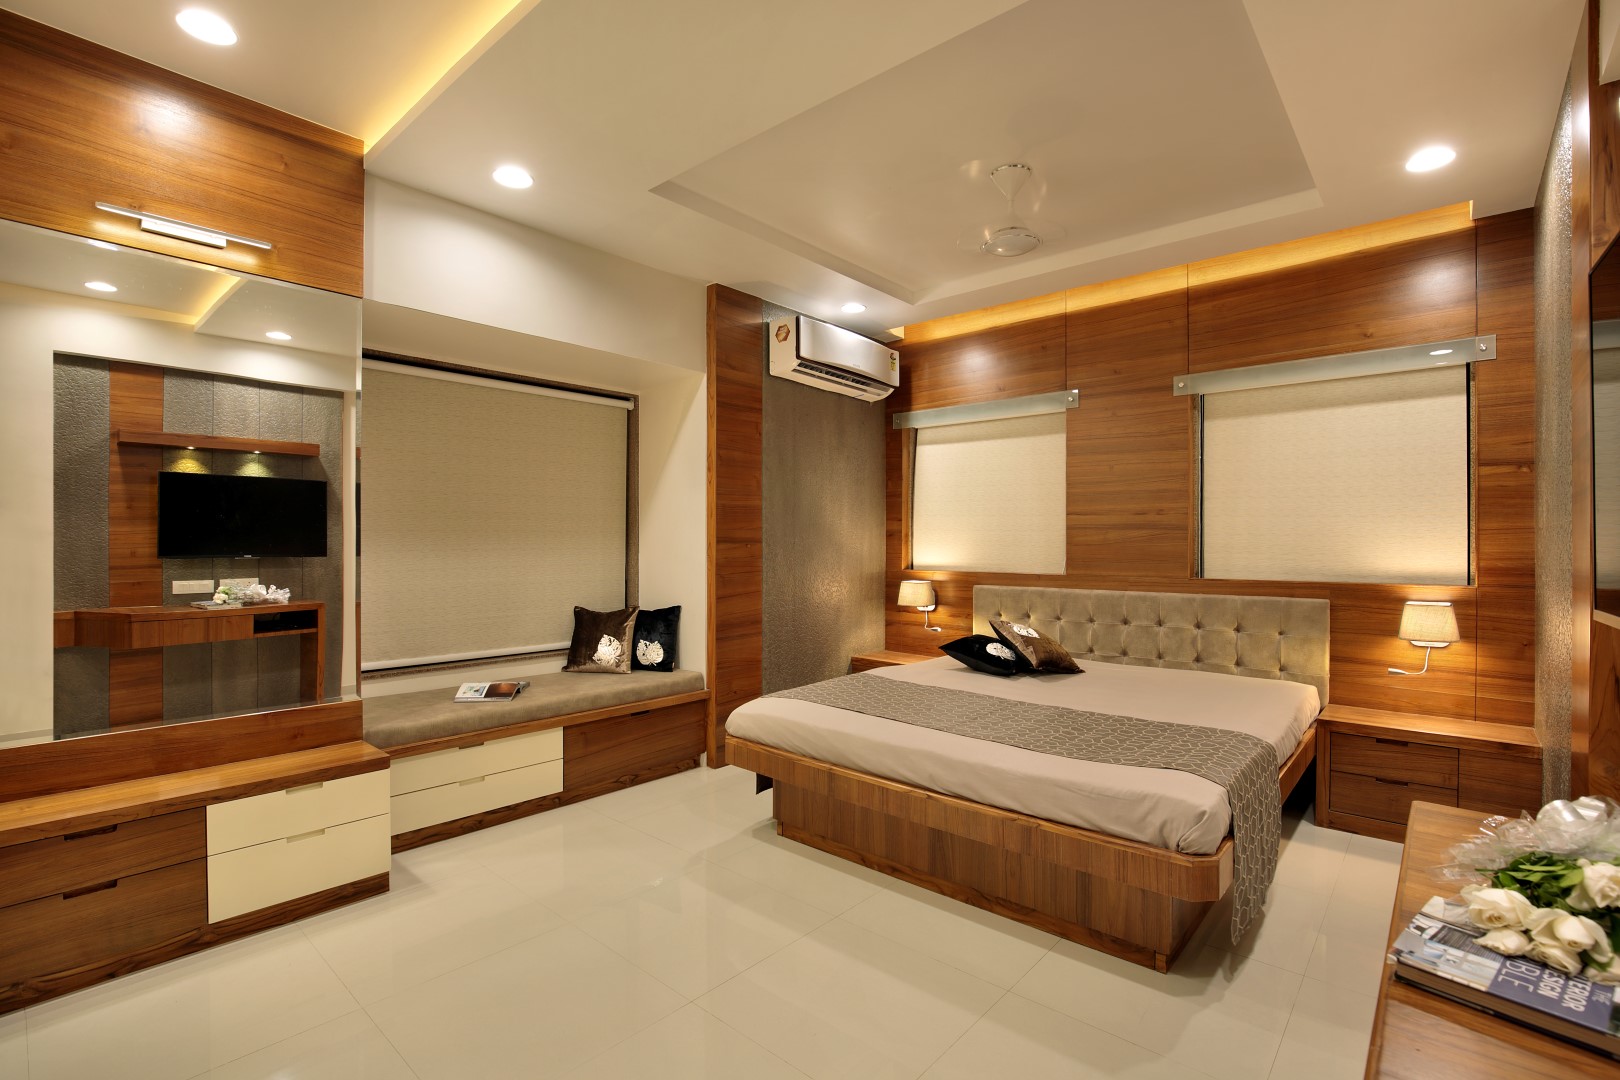 Bedroom Interior Design Ideas How To Make Your Bedroom